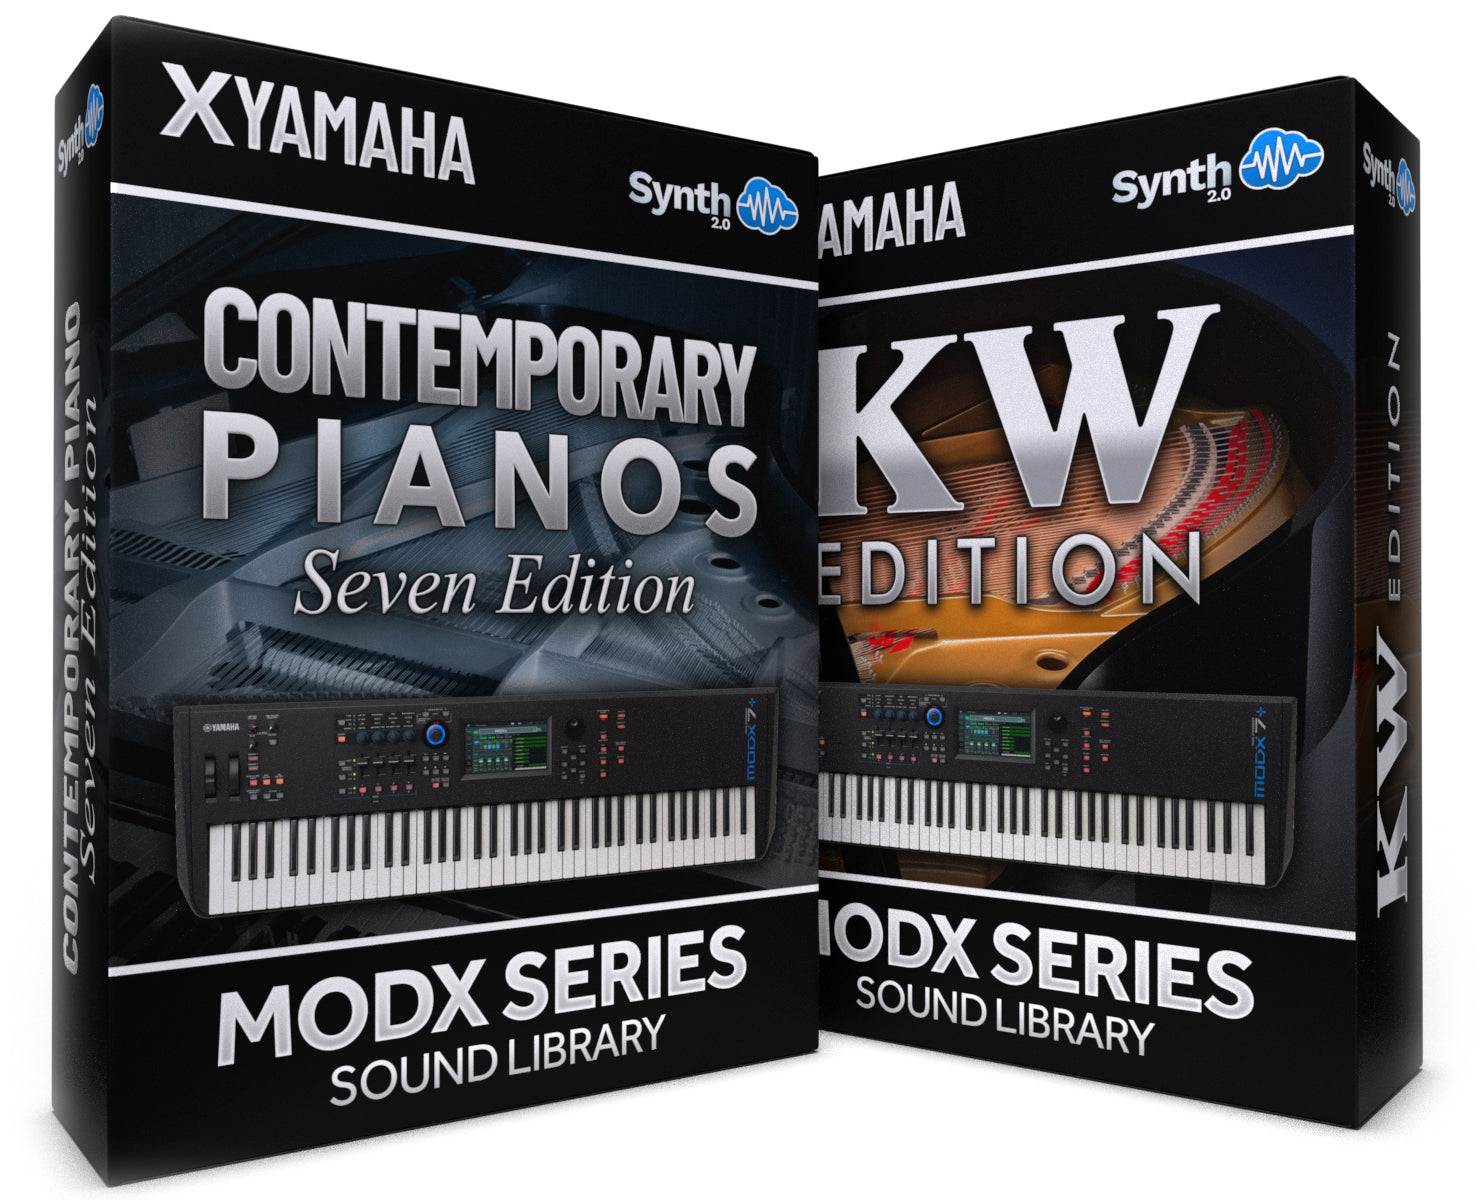 DRS029 - ( Bundle ) - Contemporary Pianos Seven Edition + KW Edition - Yamaha MODX / MODX+